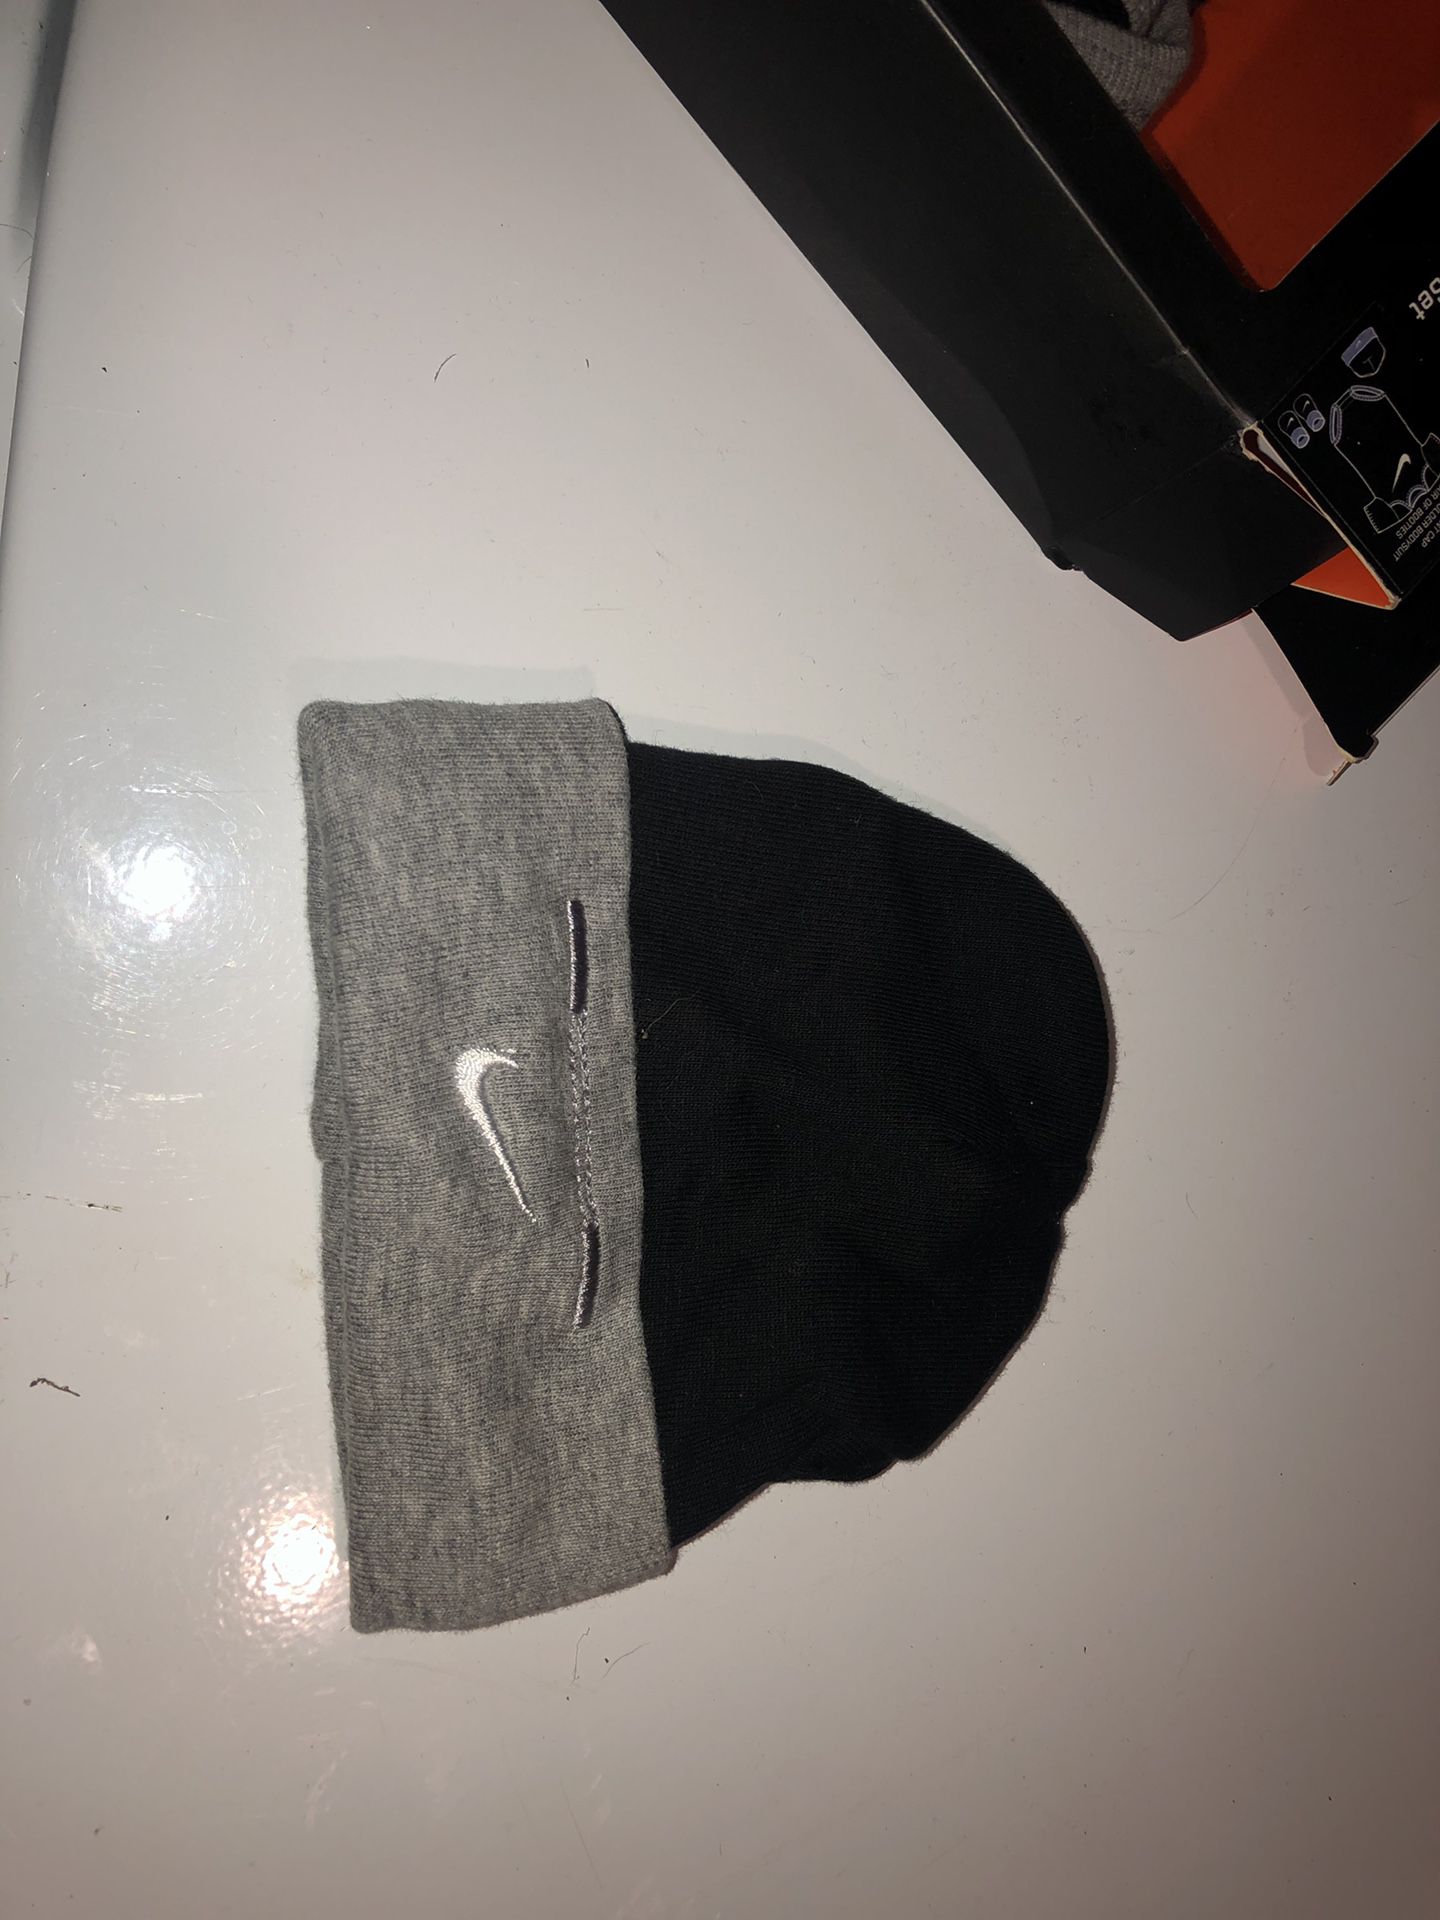 Nike 0-6 month onesie set